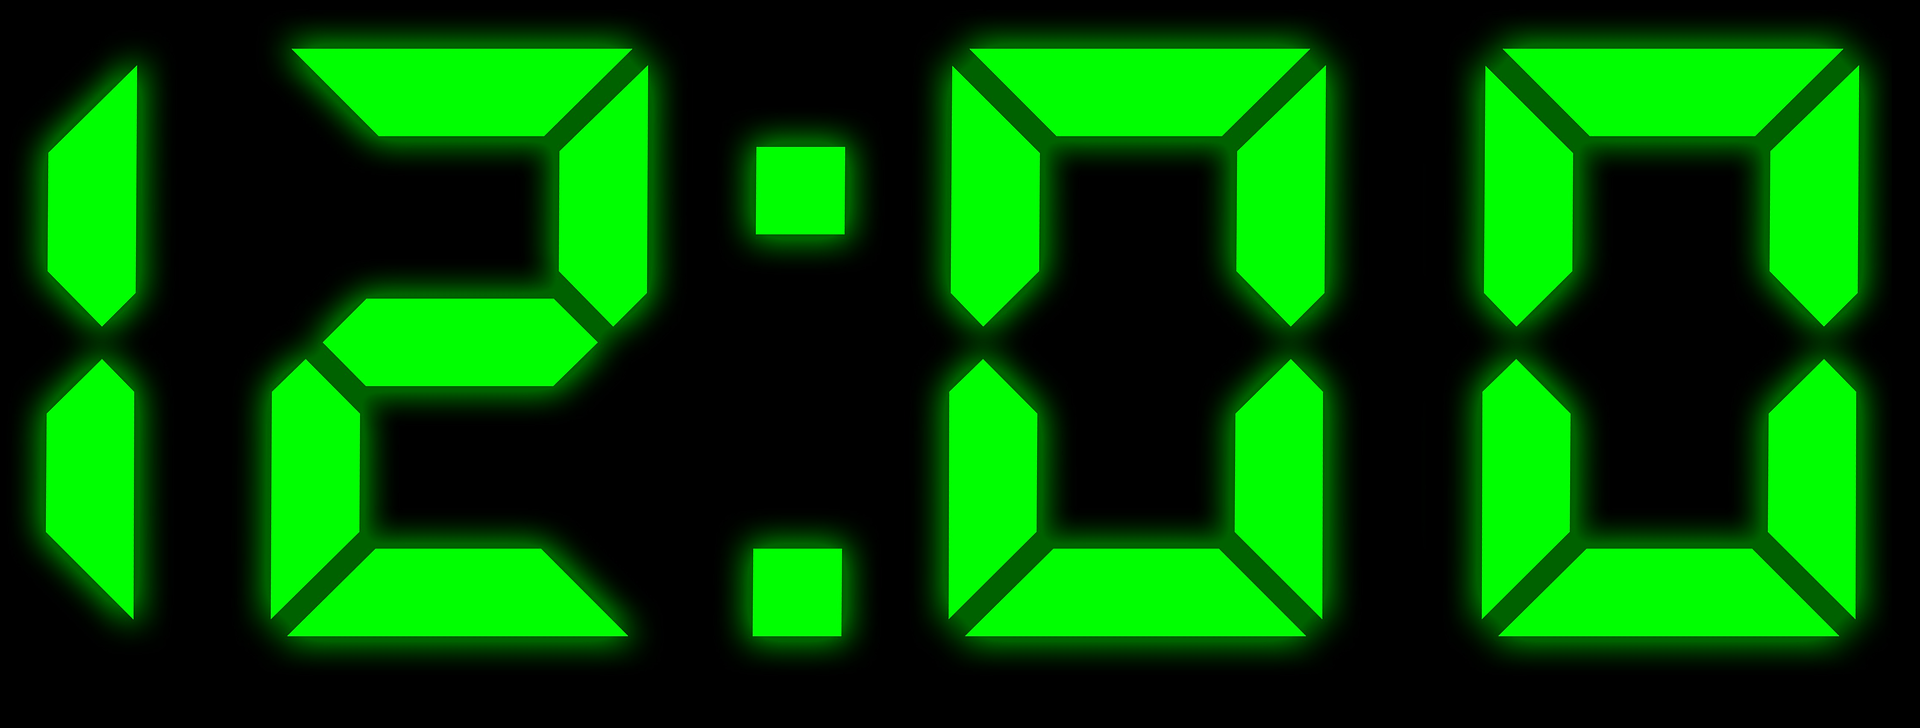 18 00 домашний. Цифры электронных часов. Электронные часы зеленые. Часы цифровые зеленые. Электронные часы 12 00.